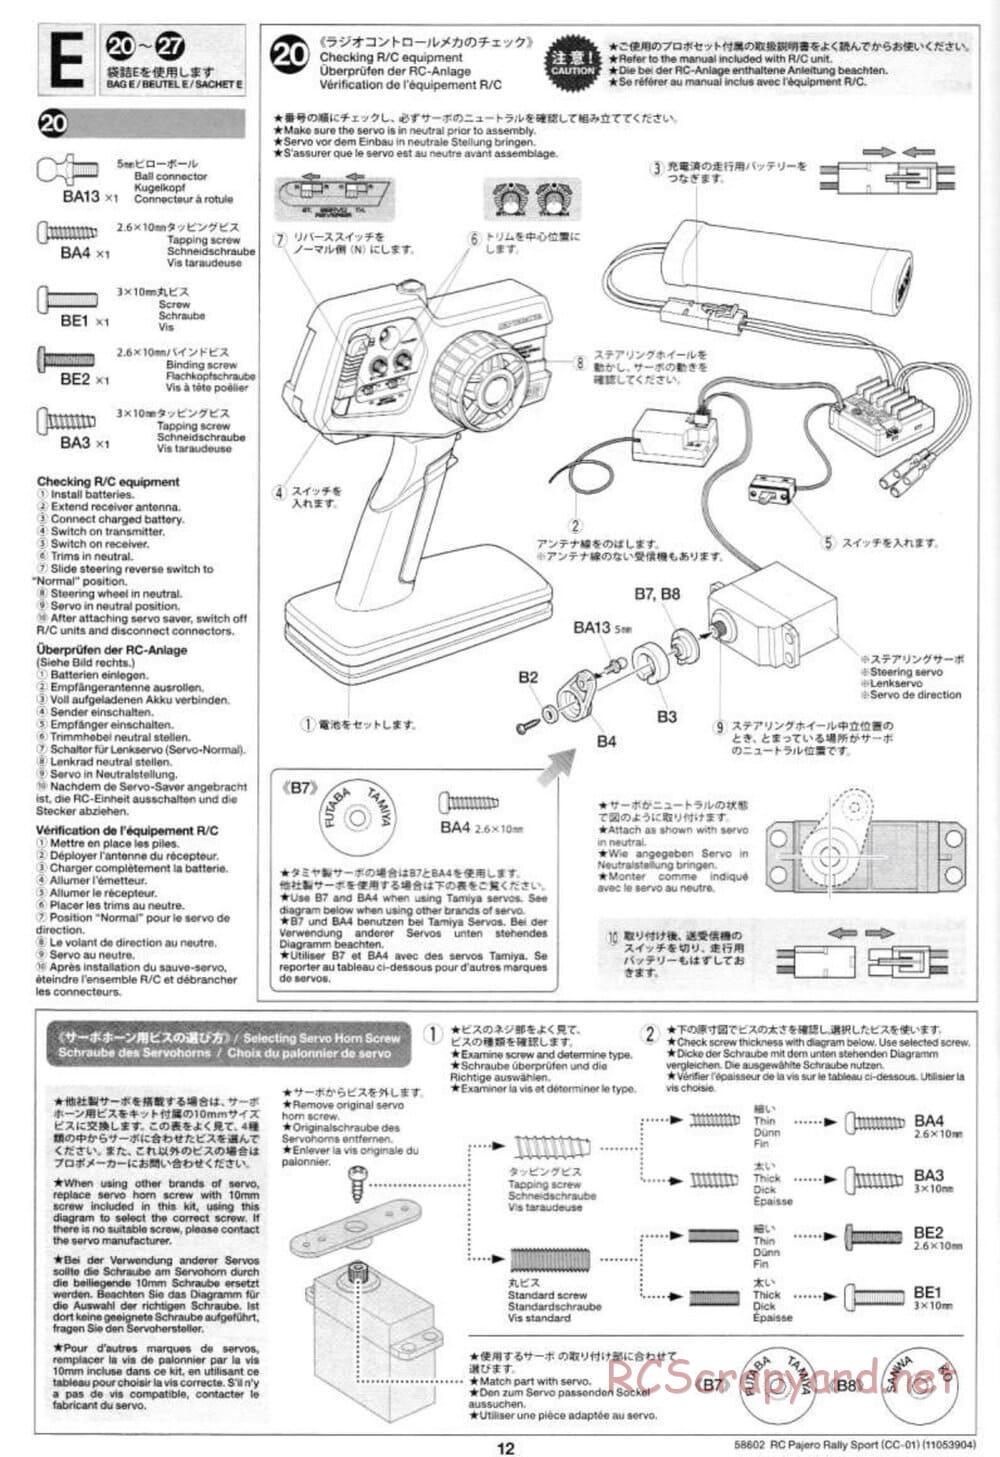 Tamiya - Mitsubishi Pajero Rally Sport - CC-01 Chassis - Manual - Page 12